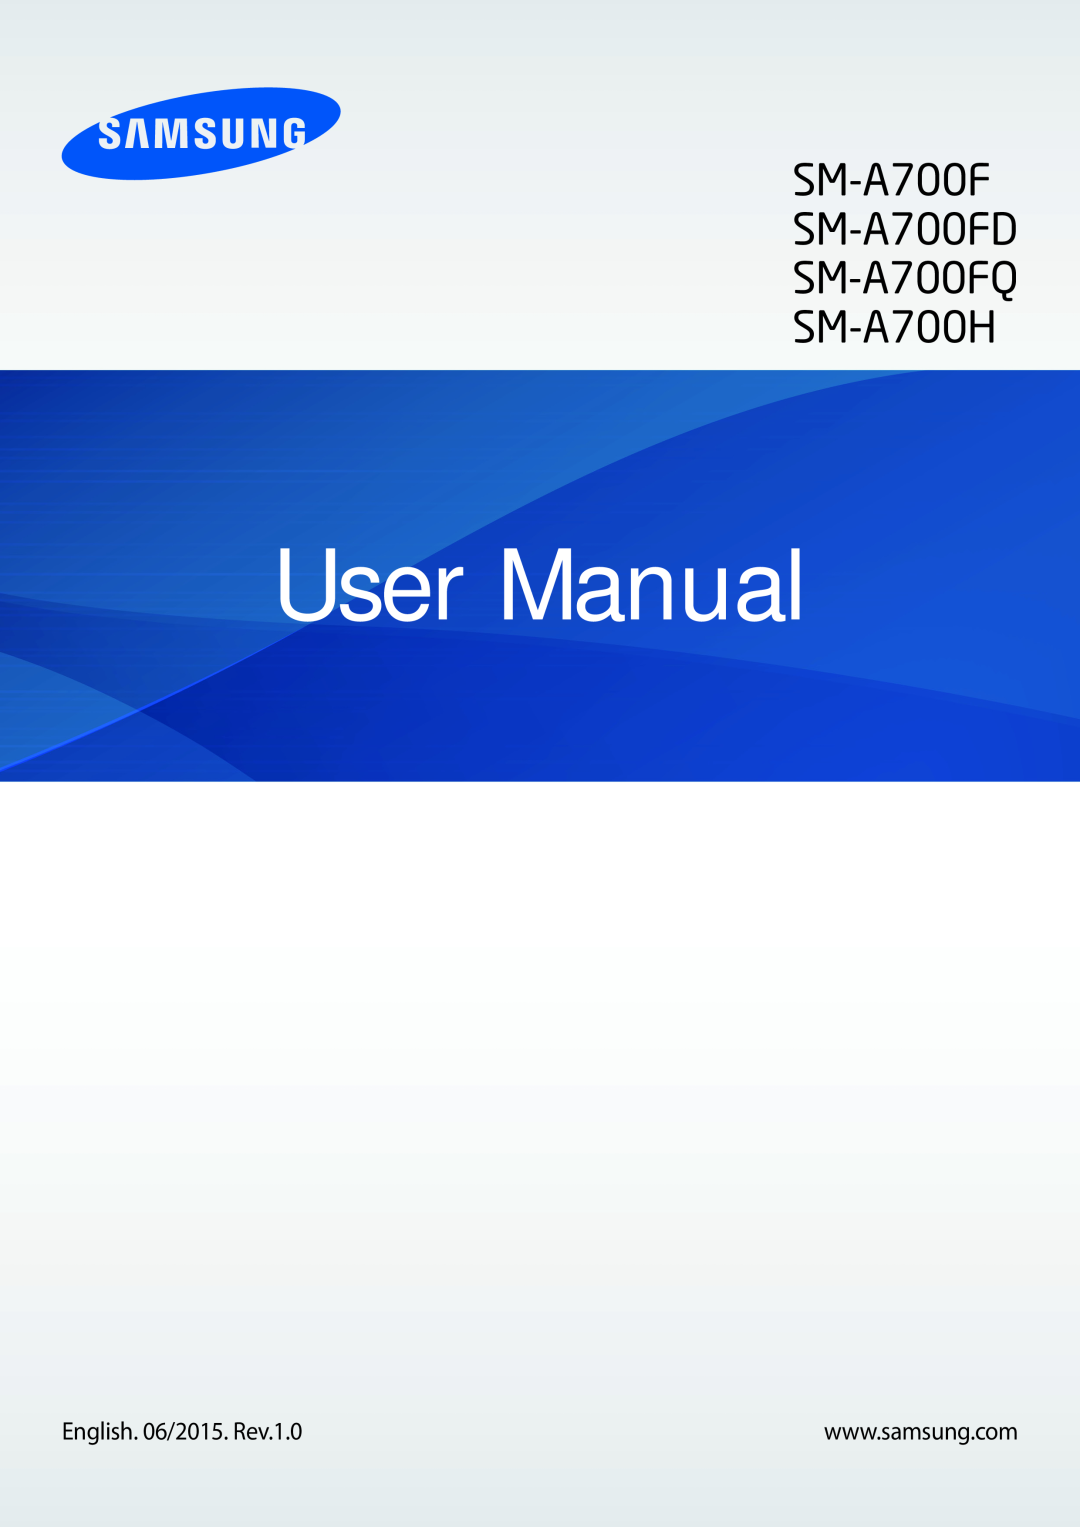 Samsung SM-A700FZKACYO, SM-A700FZKADBT, SM-A700FZWATPH, SM-A700FZDASEB manual User Manual, SM-A700FD SM-A700F SM-A700H 